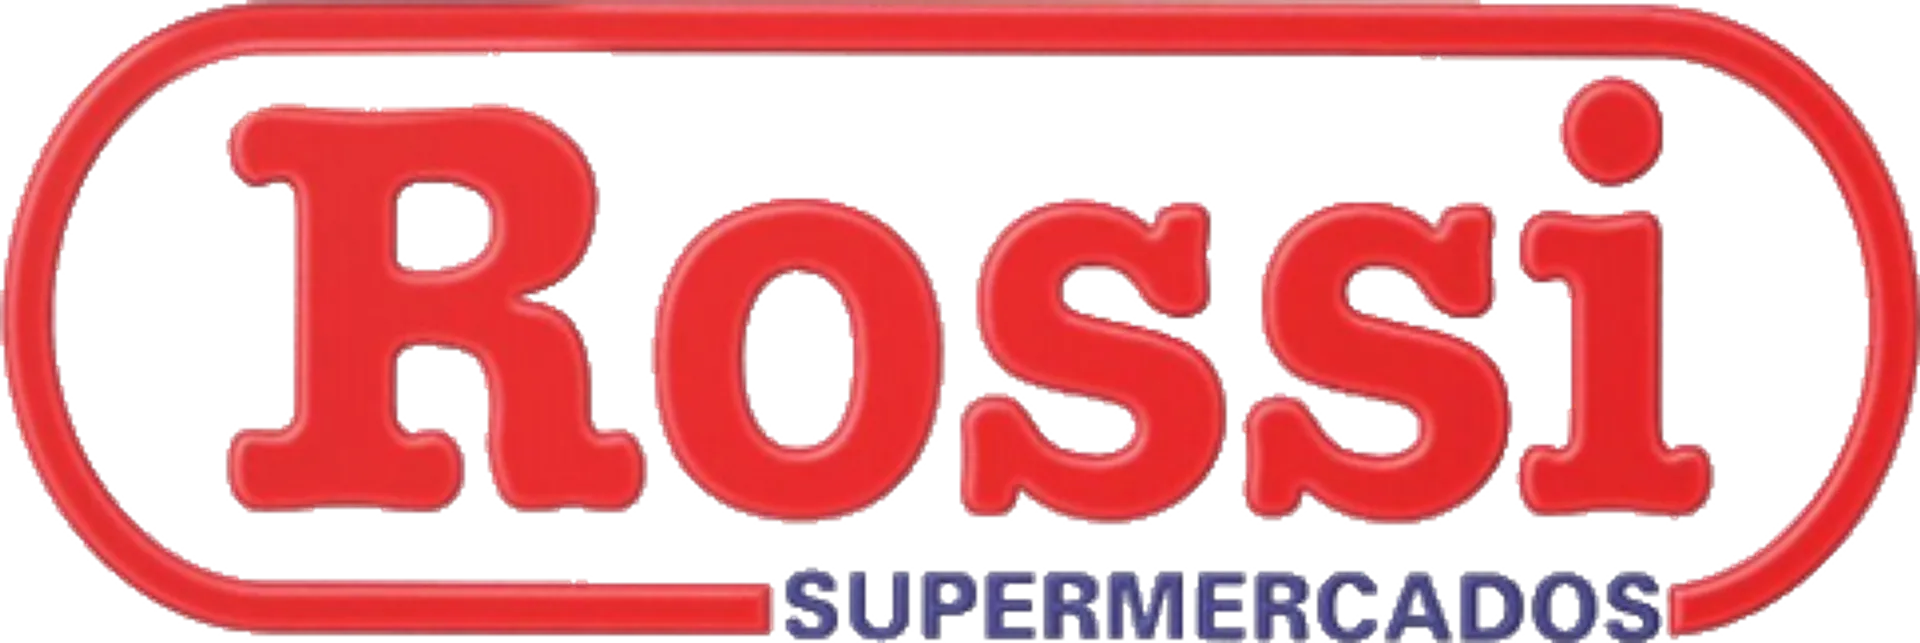 ROSSI SUPERMERCADOS logo